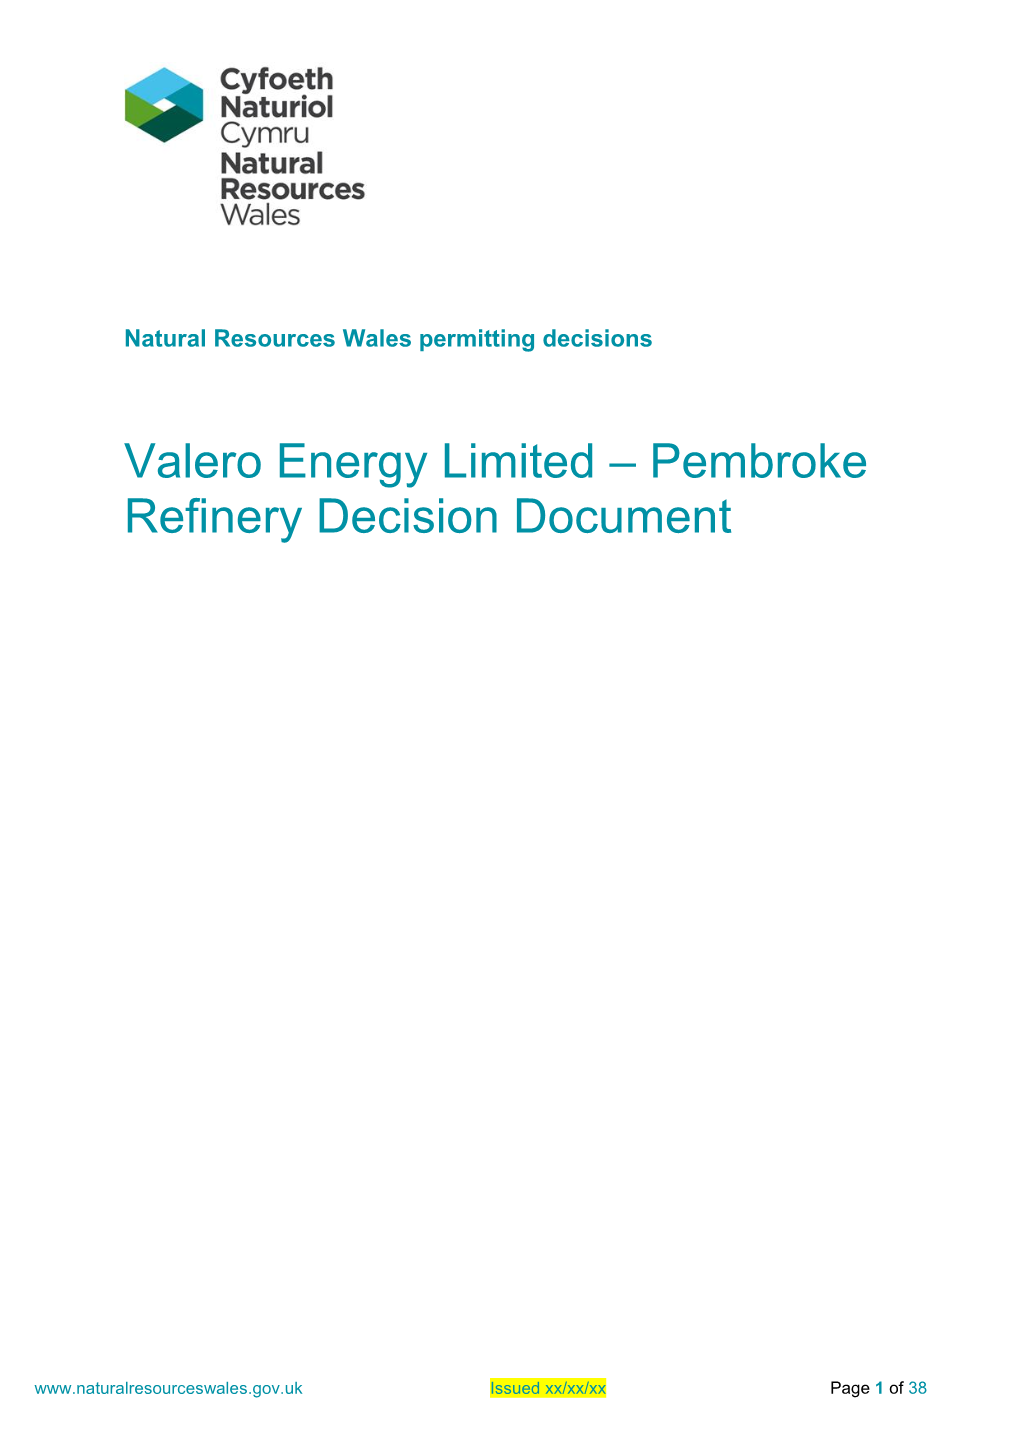 Valero Energy Limited – Pembroke Refinery Decision Document